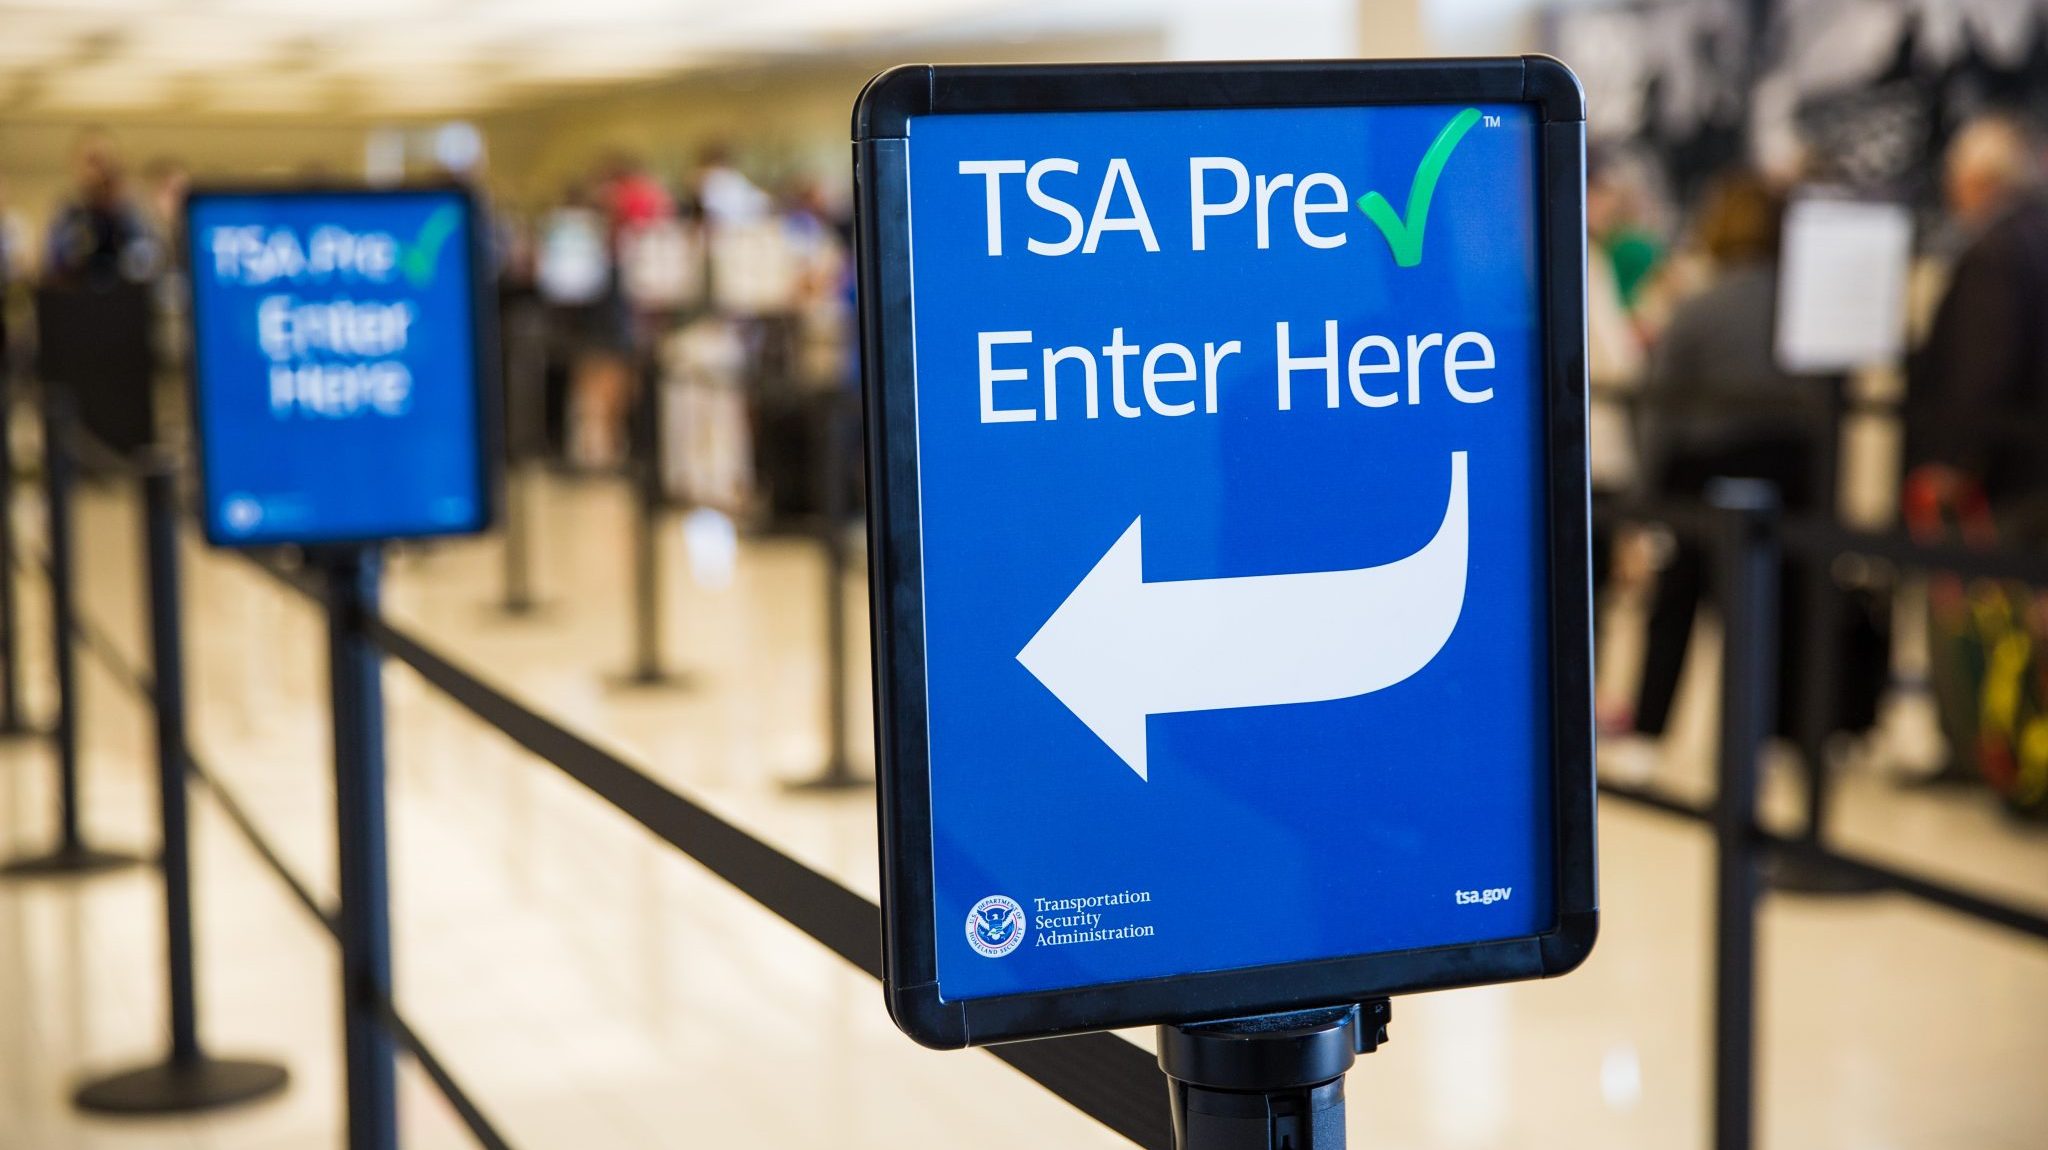 Senators Wants to Limit TSA’s Use of Facial Recognition Technology